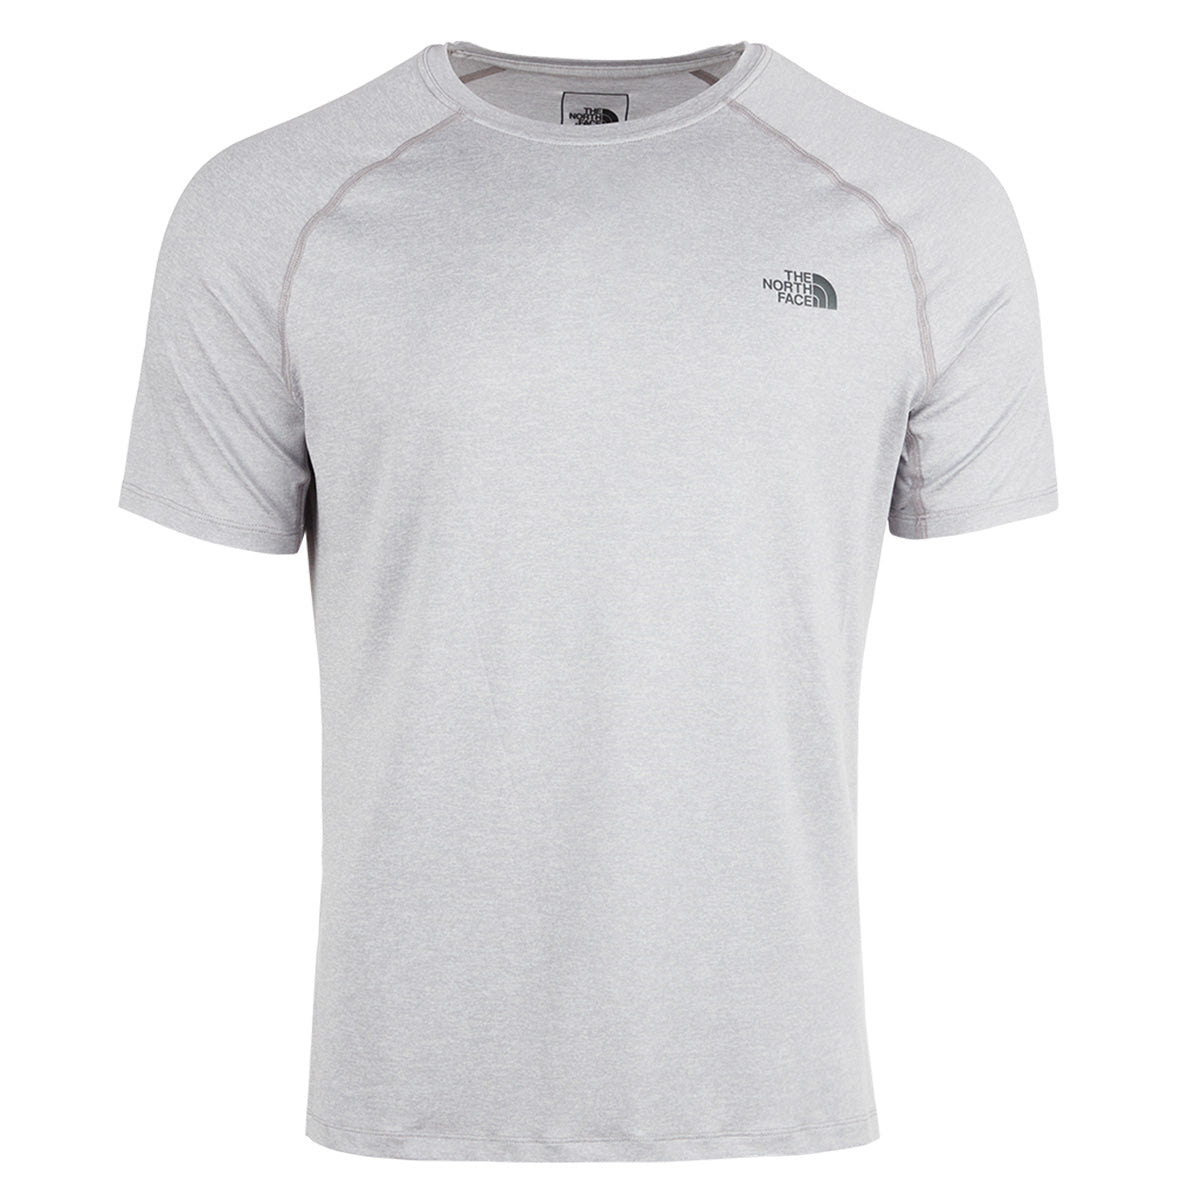 The North Face Men's Hyperlayer FD Short Sleeve Shirt for $15.99+FS!